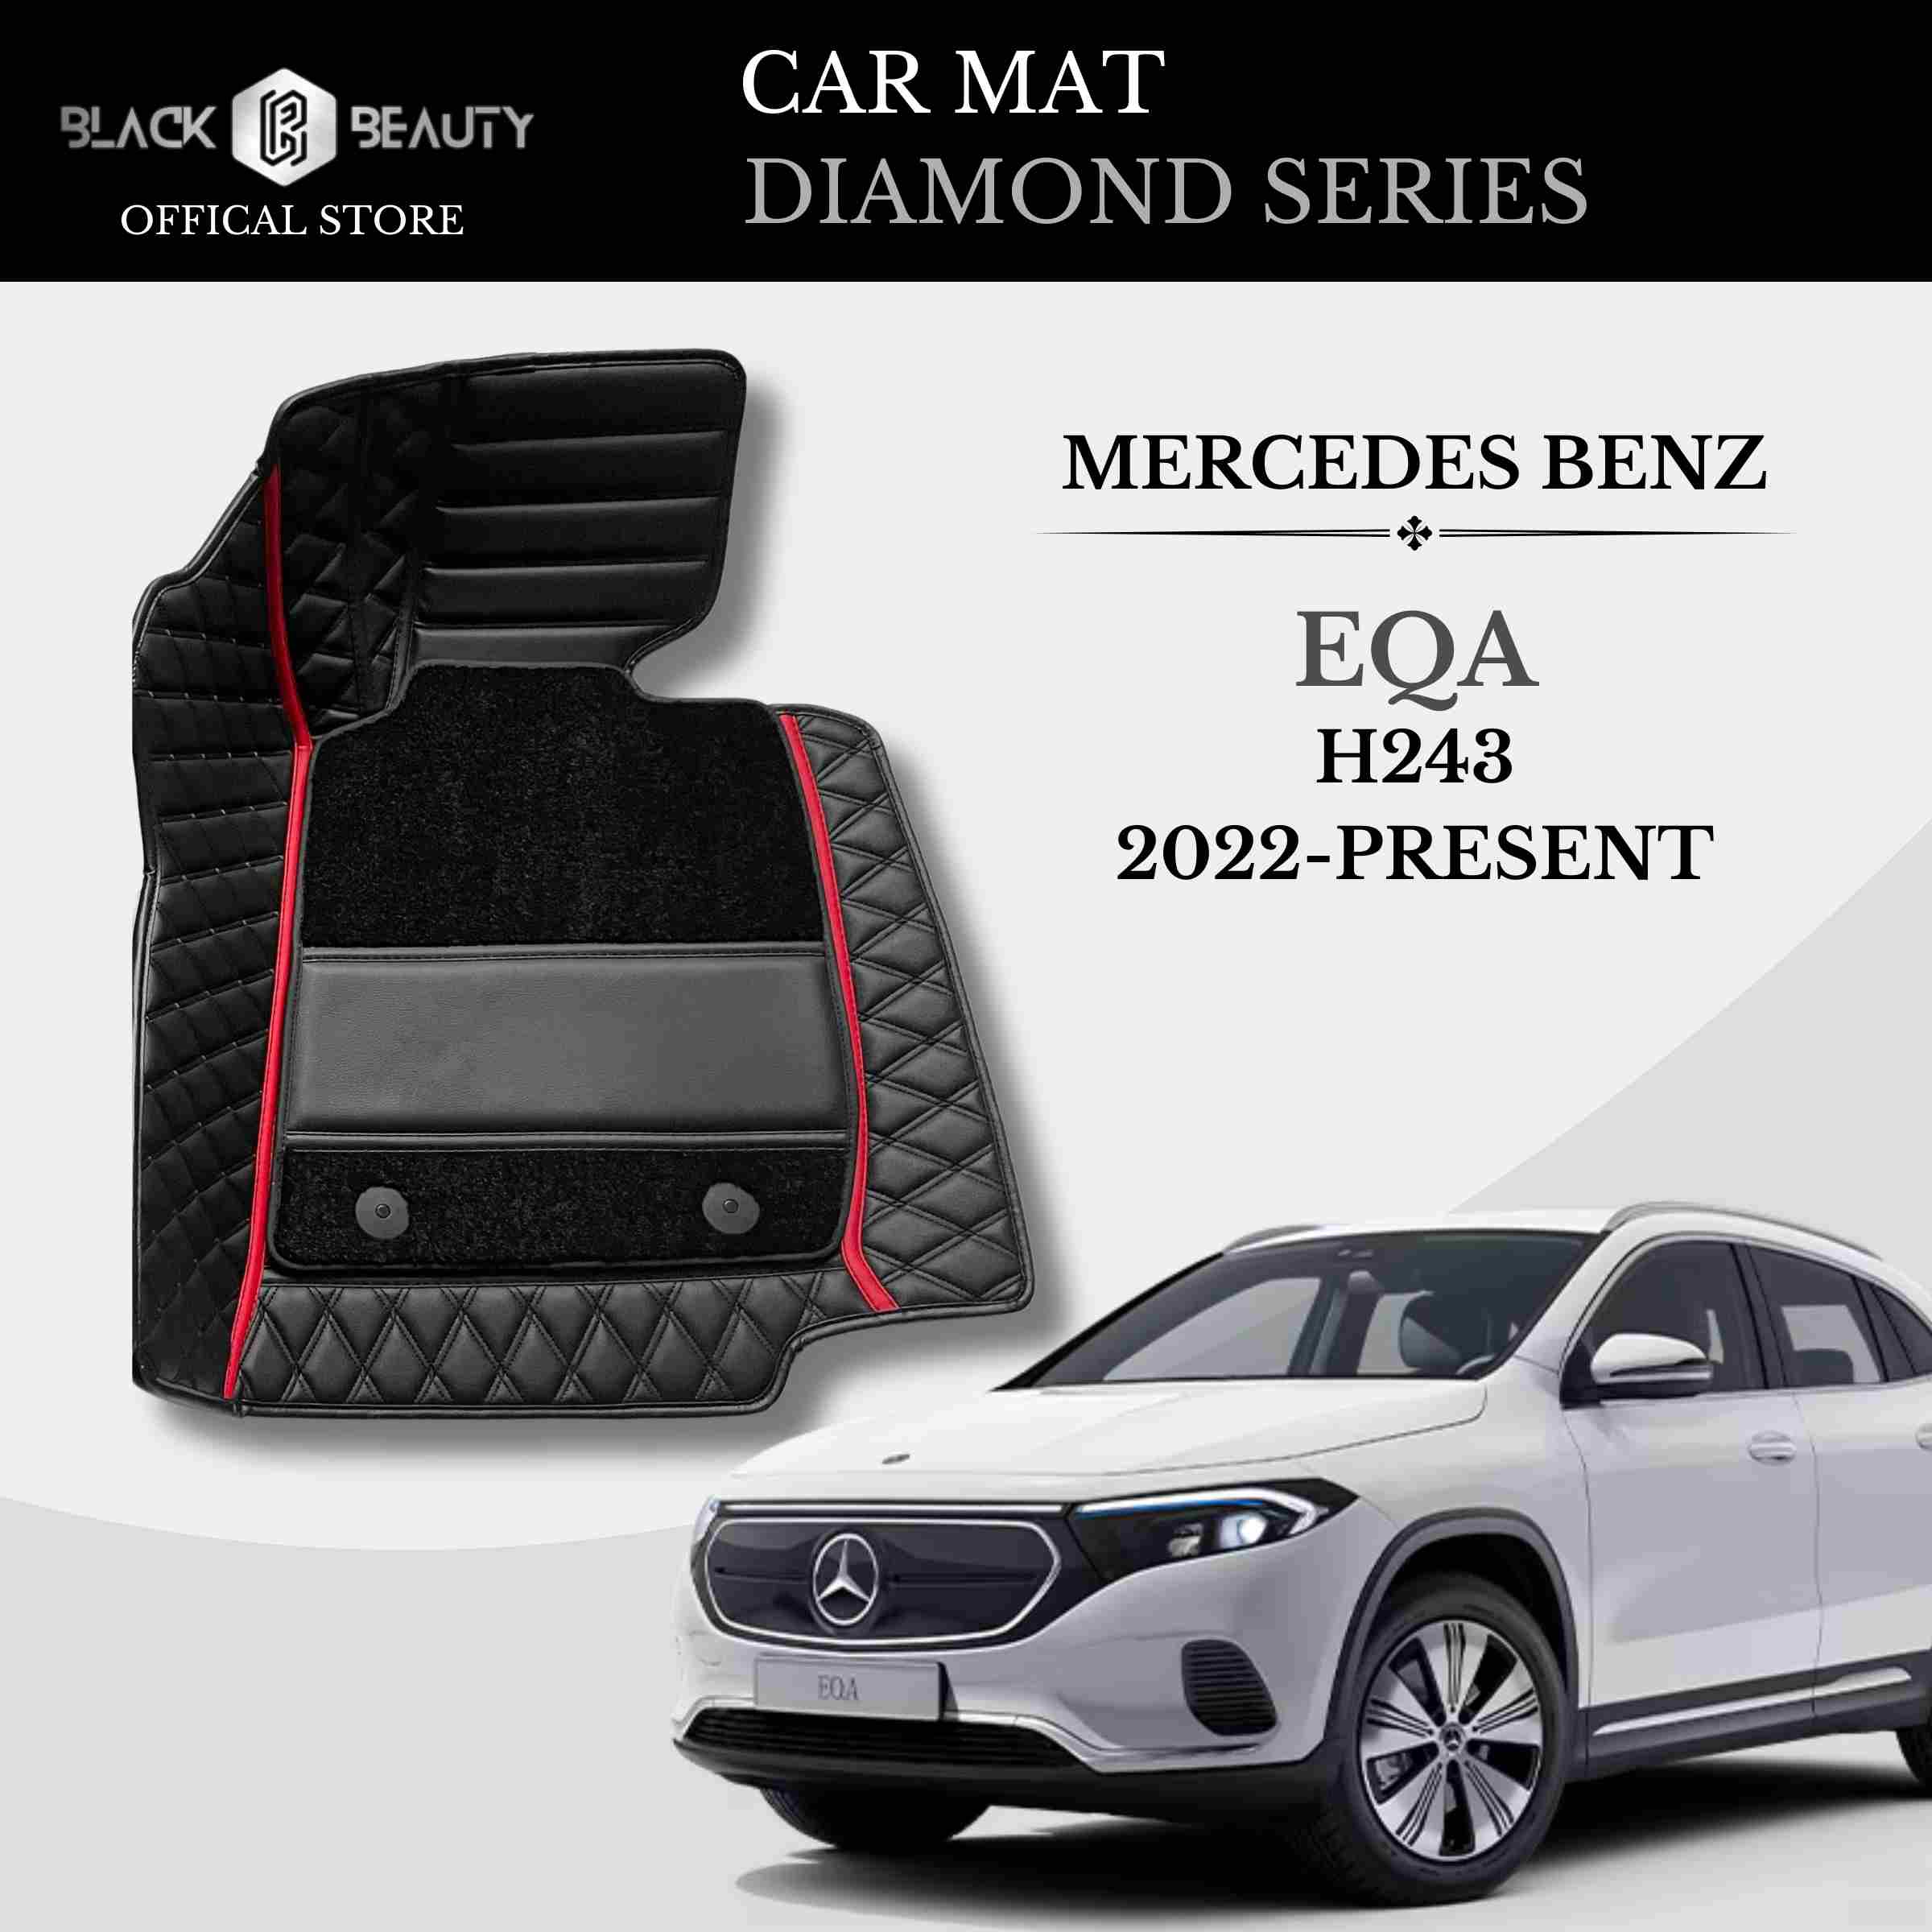 Mercedes Benz EQA H243 (2022-Present) - Diamond Series Car Mat